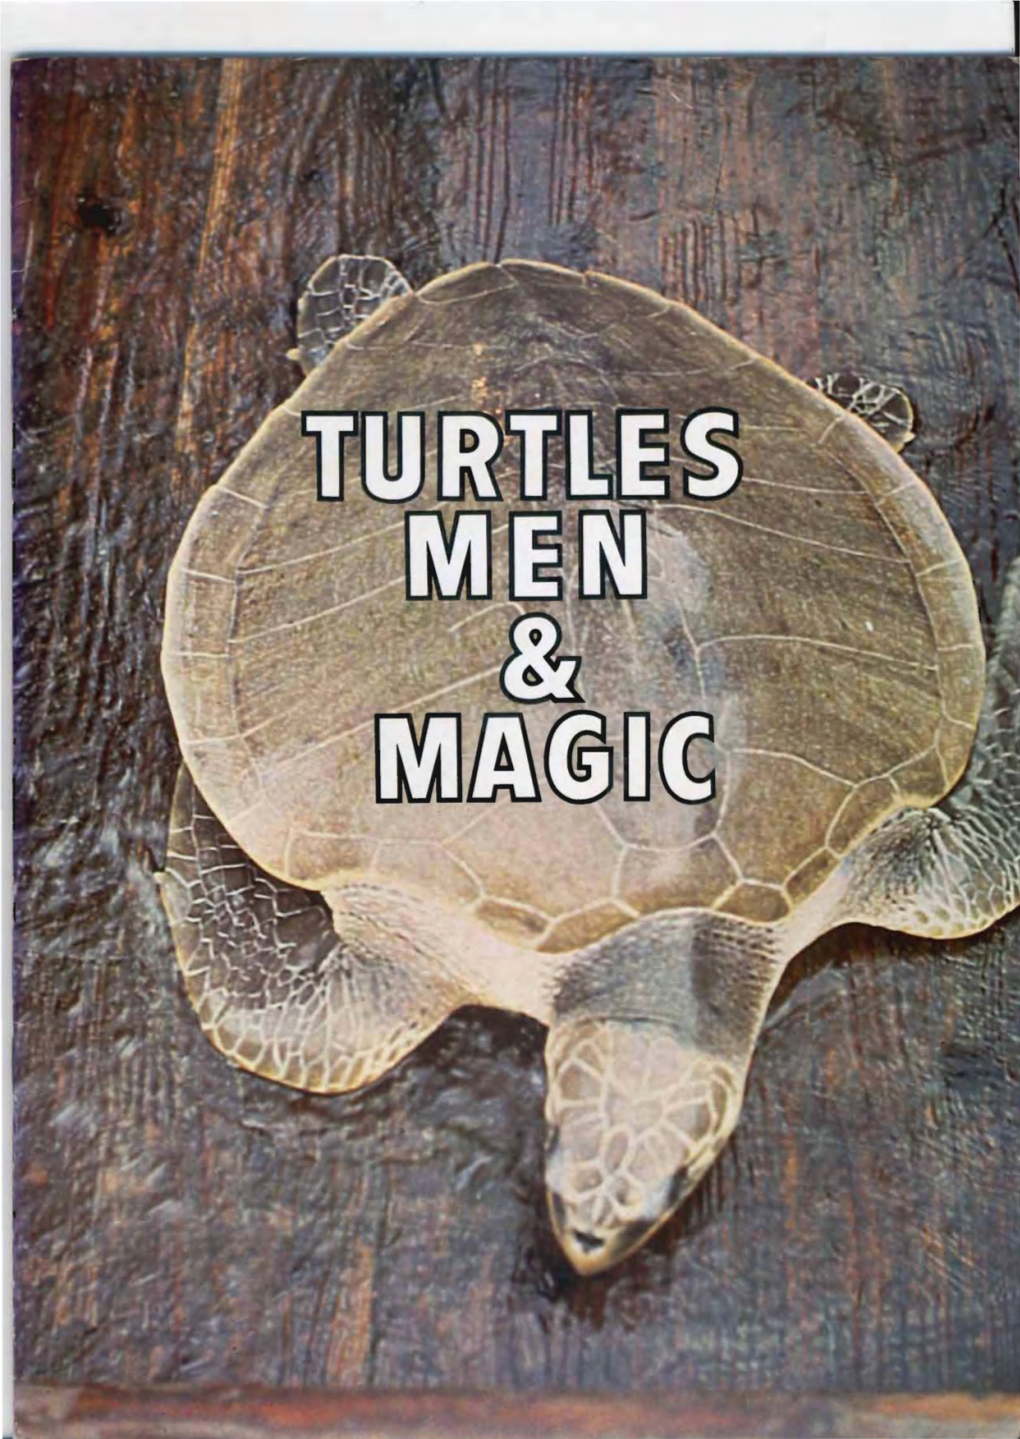 Spring (1980) Turtles Men and Magic